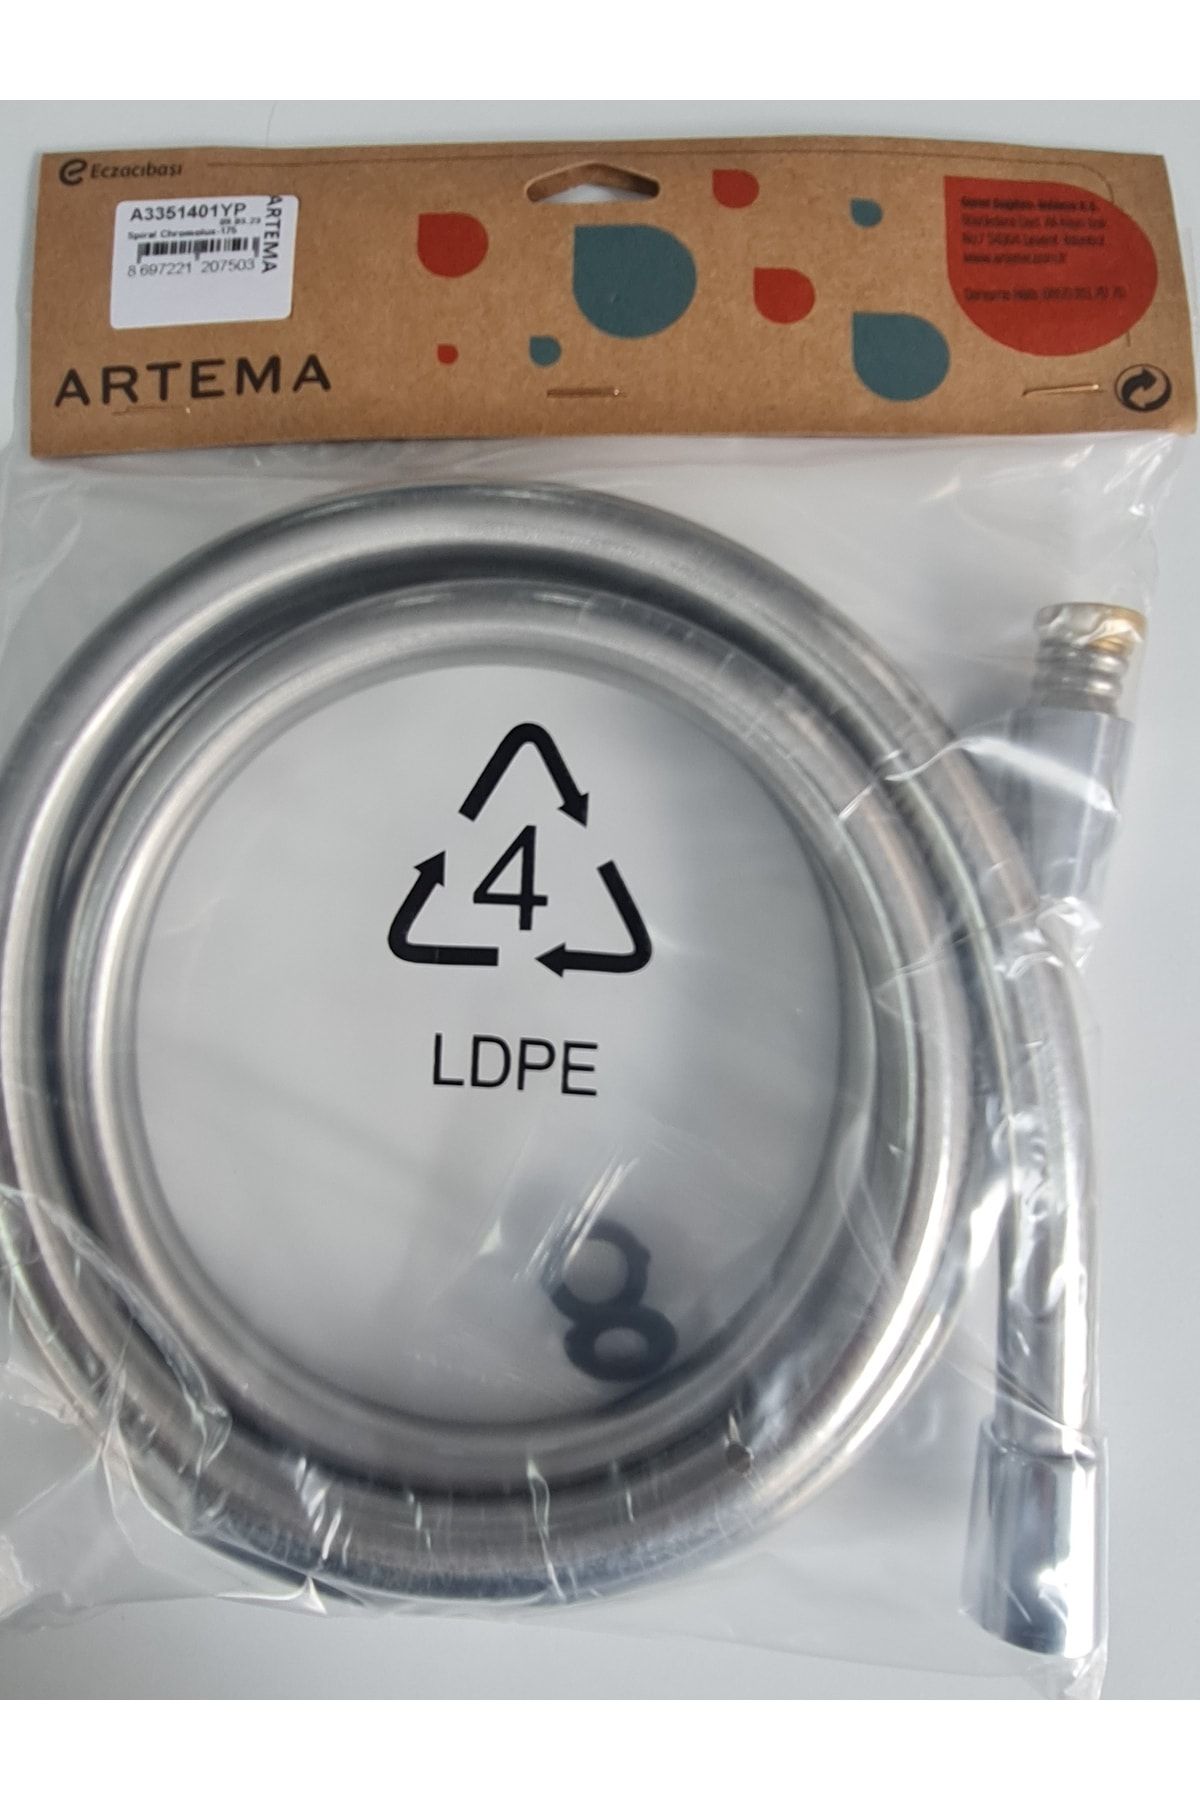 Artema Spiral Chromolux - 175 Cm A3351401yp